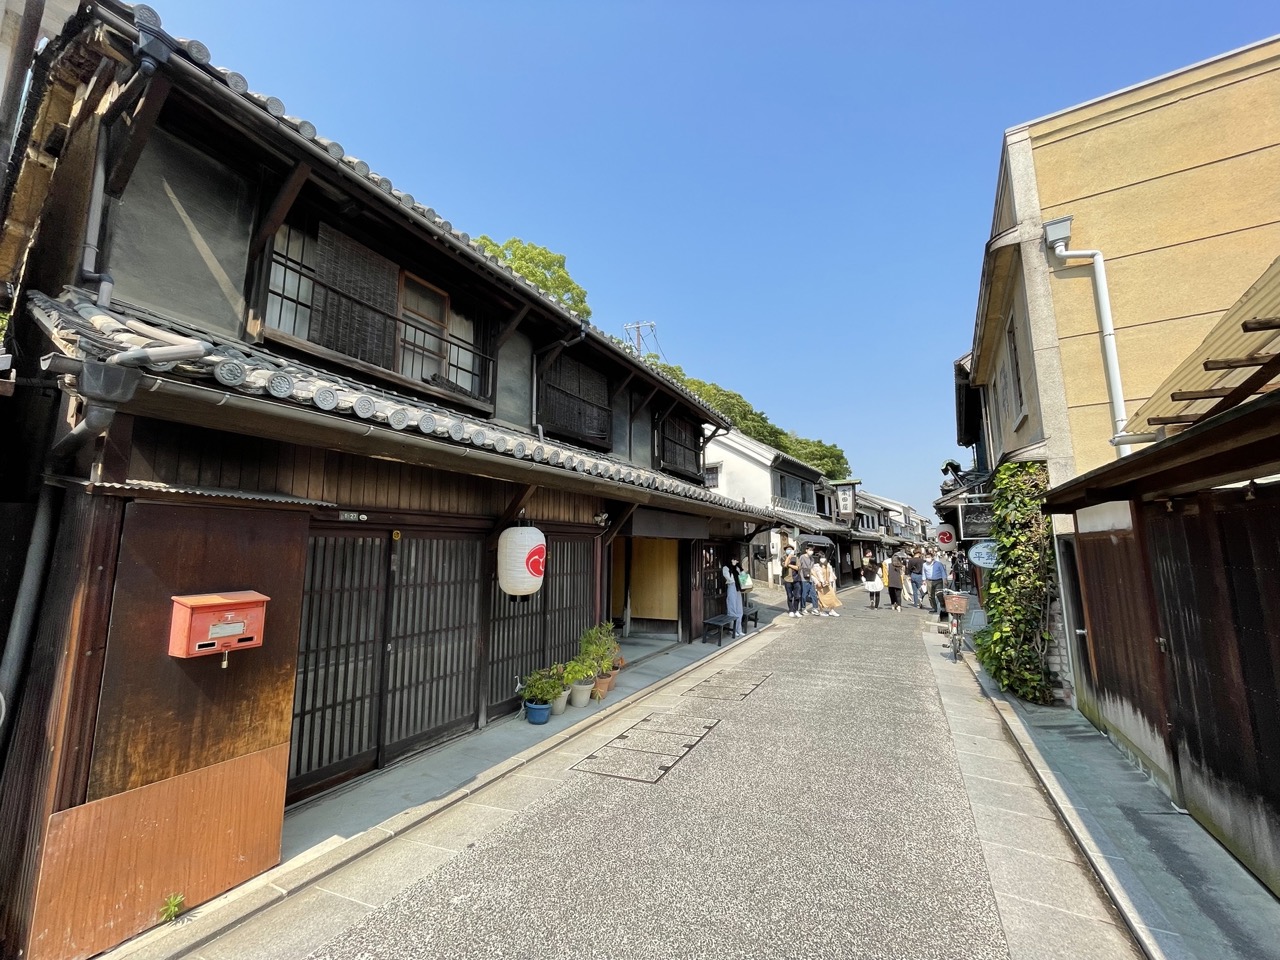 Kurashiki Bikan Historical Quarter - walking area